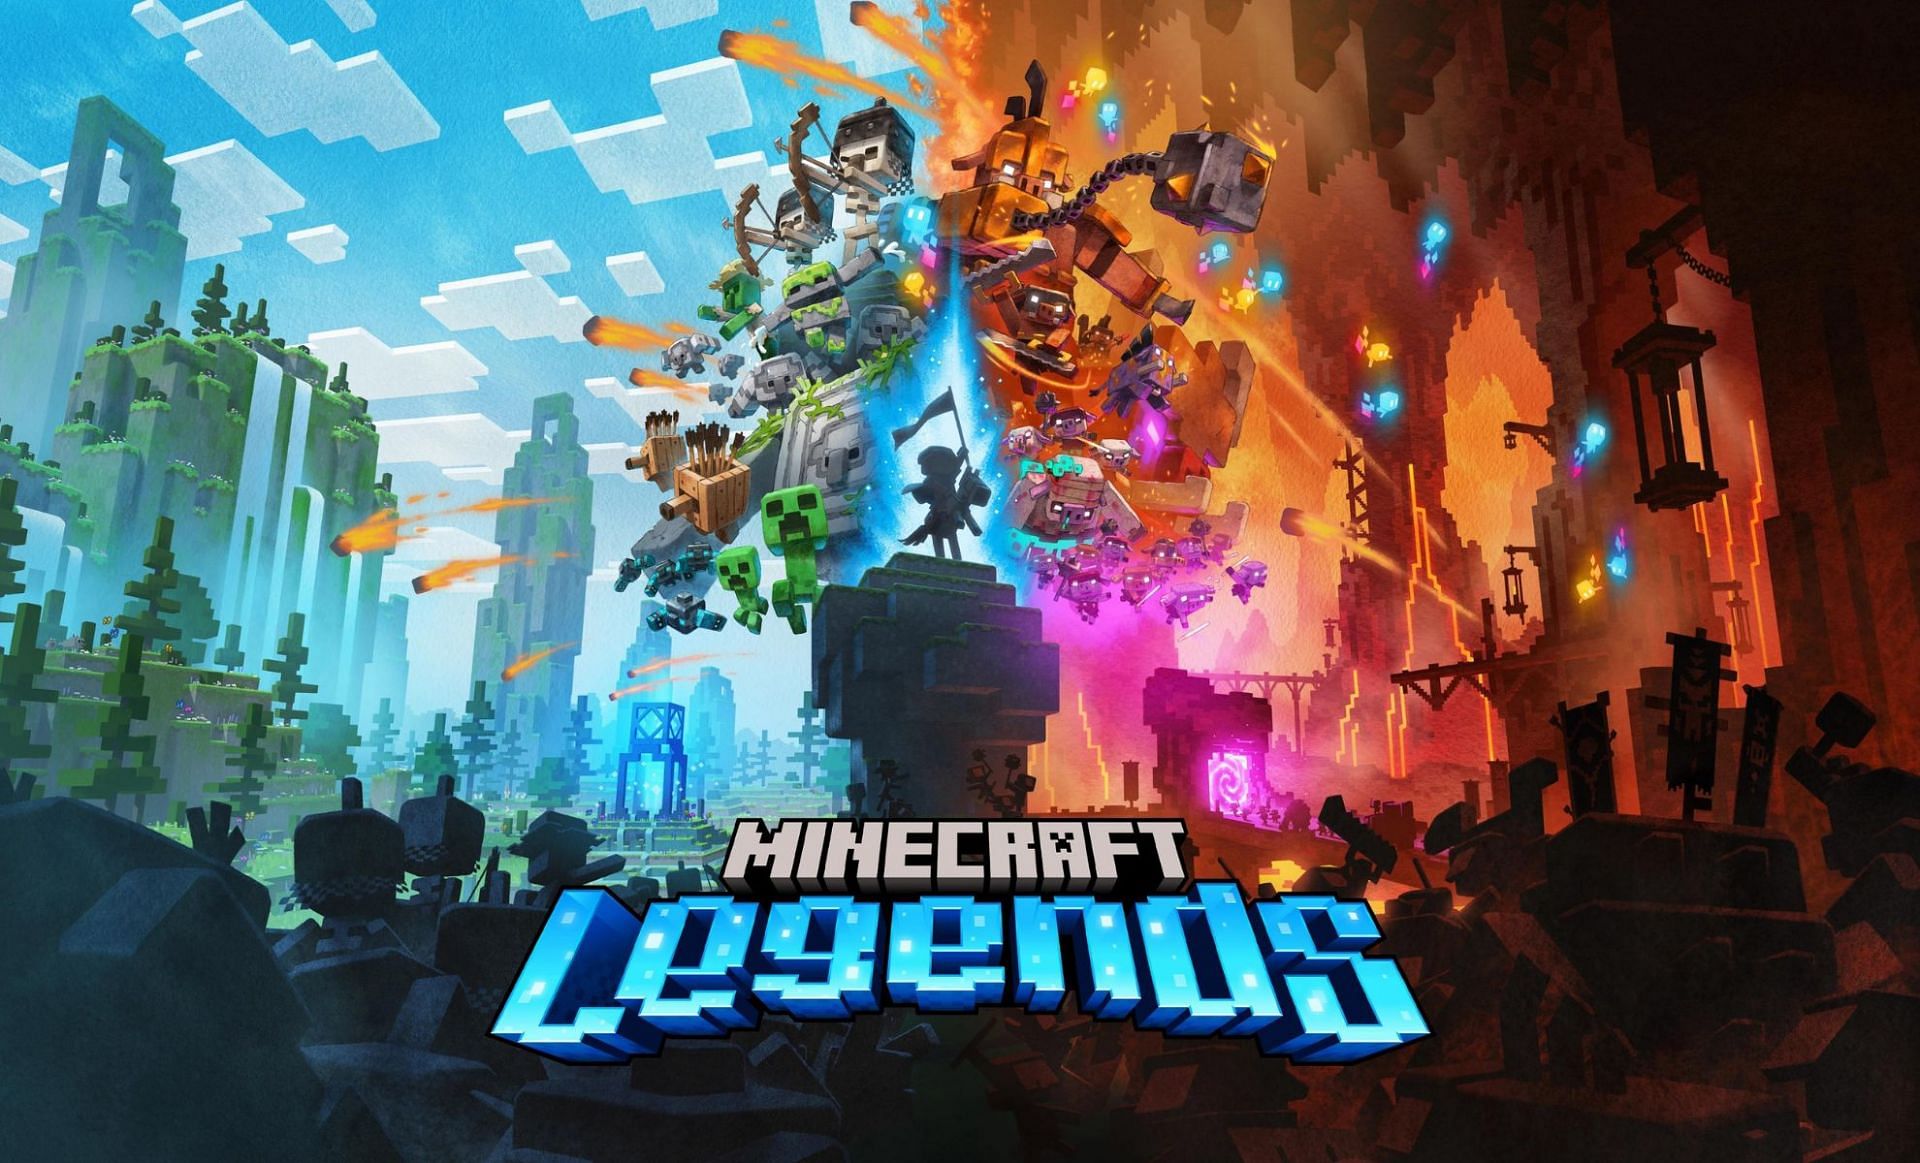 Minecraft Legends cover art (Image via Mojang)